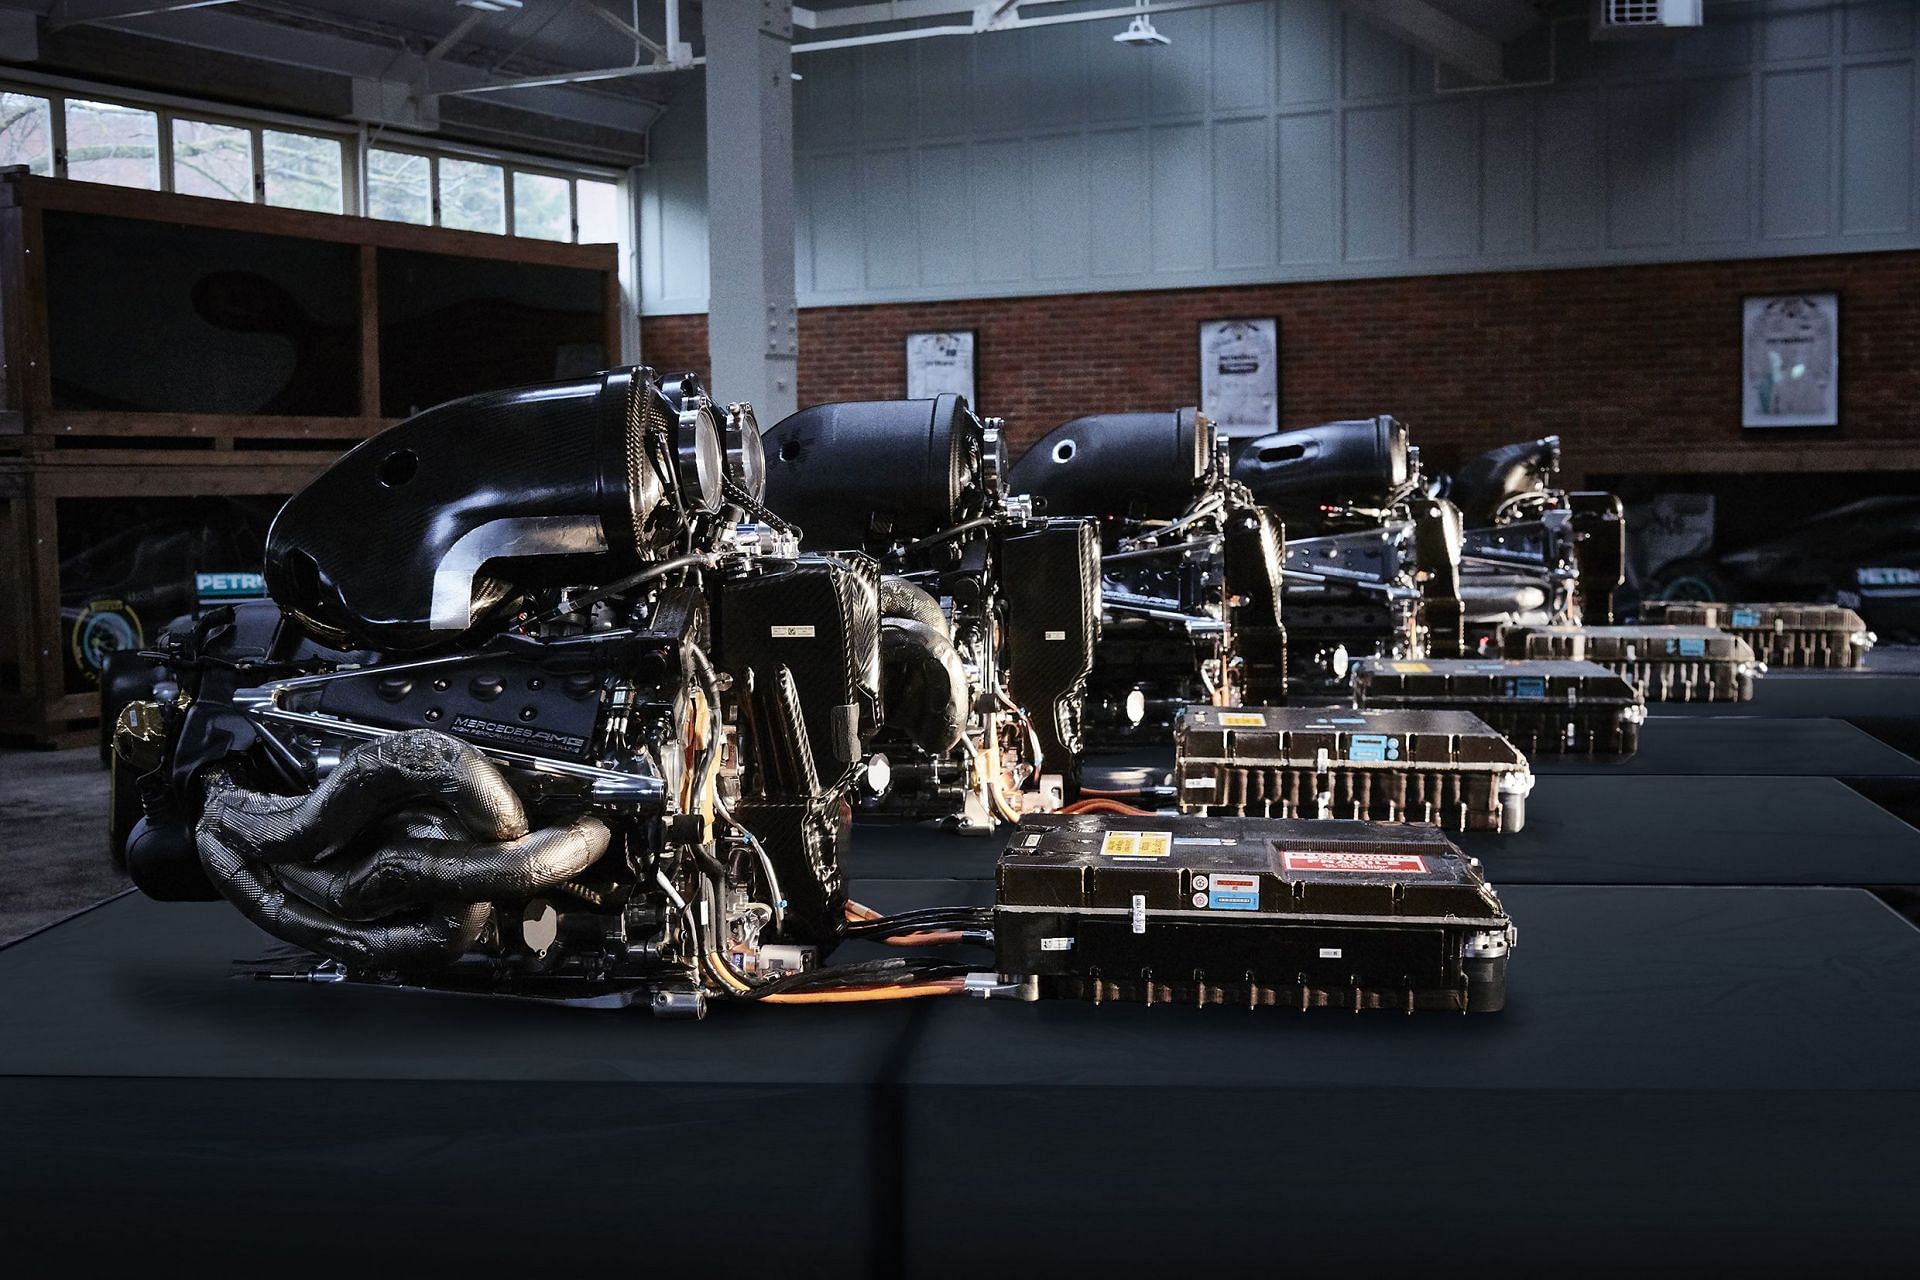 F1 v6 hybrid turbo engine- Mercedes championship winning engines (Photo by- Mercedes AMG Motorsport)